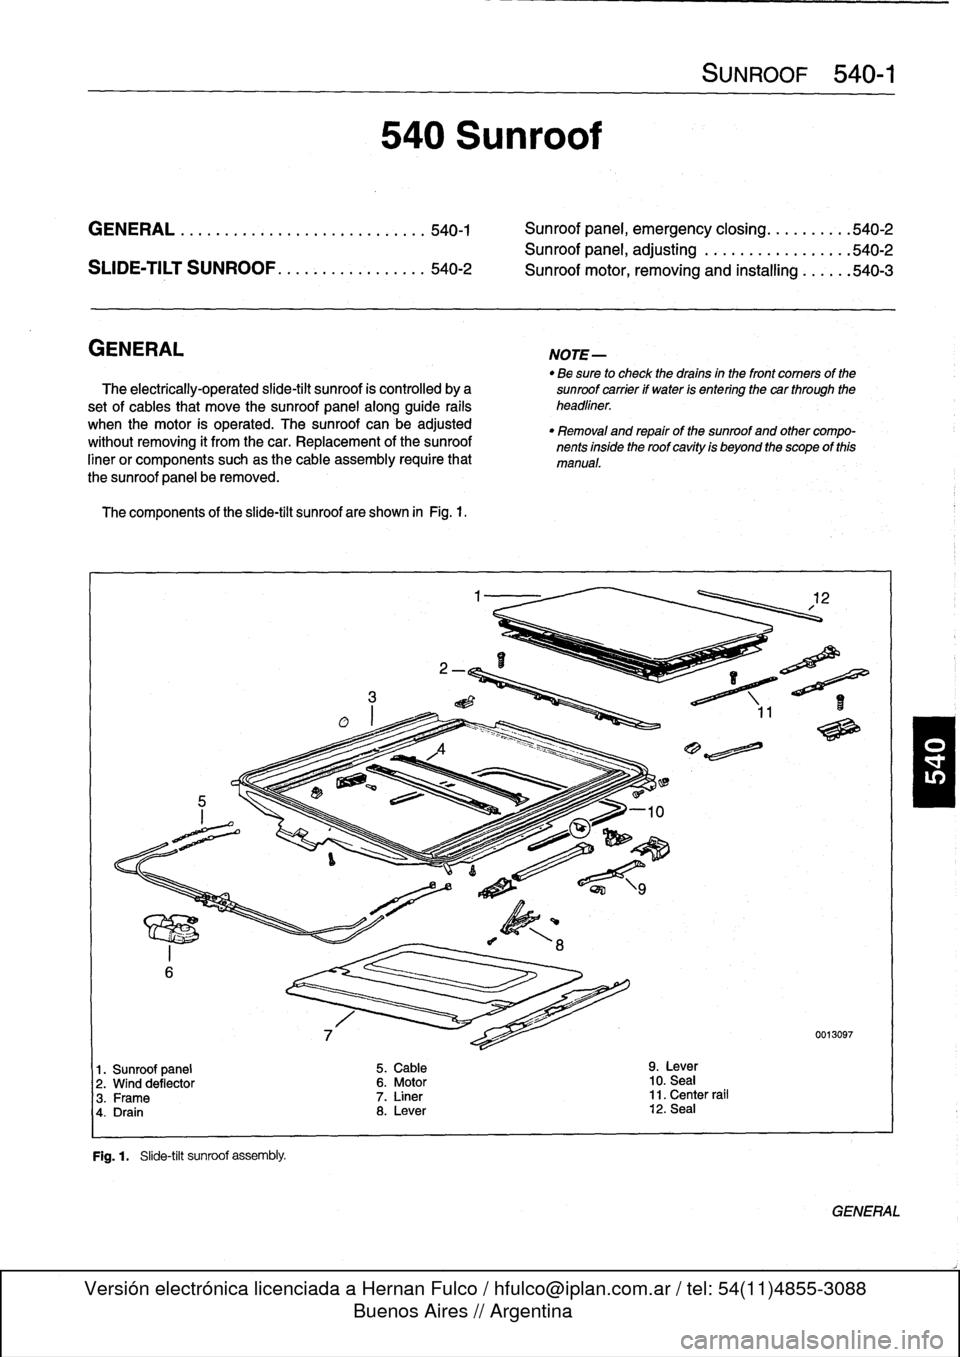 BMW M3 1993 E36 Workshop Manual 
GENERAL
...
.
.
.
.
.
................
.
.
.
.
540-1

	

Sunroof
panel,
emergency
closing
.......
.
.
.540-2

Sunroof
panel,
adjusting
..
.
...........
.
.
.540-2

SUDE-TILT
SUNROOF
.
.
.
.
.
.
.
.
.